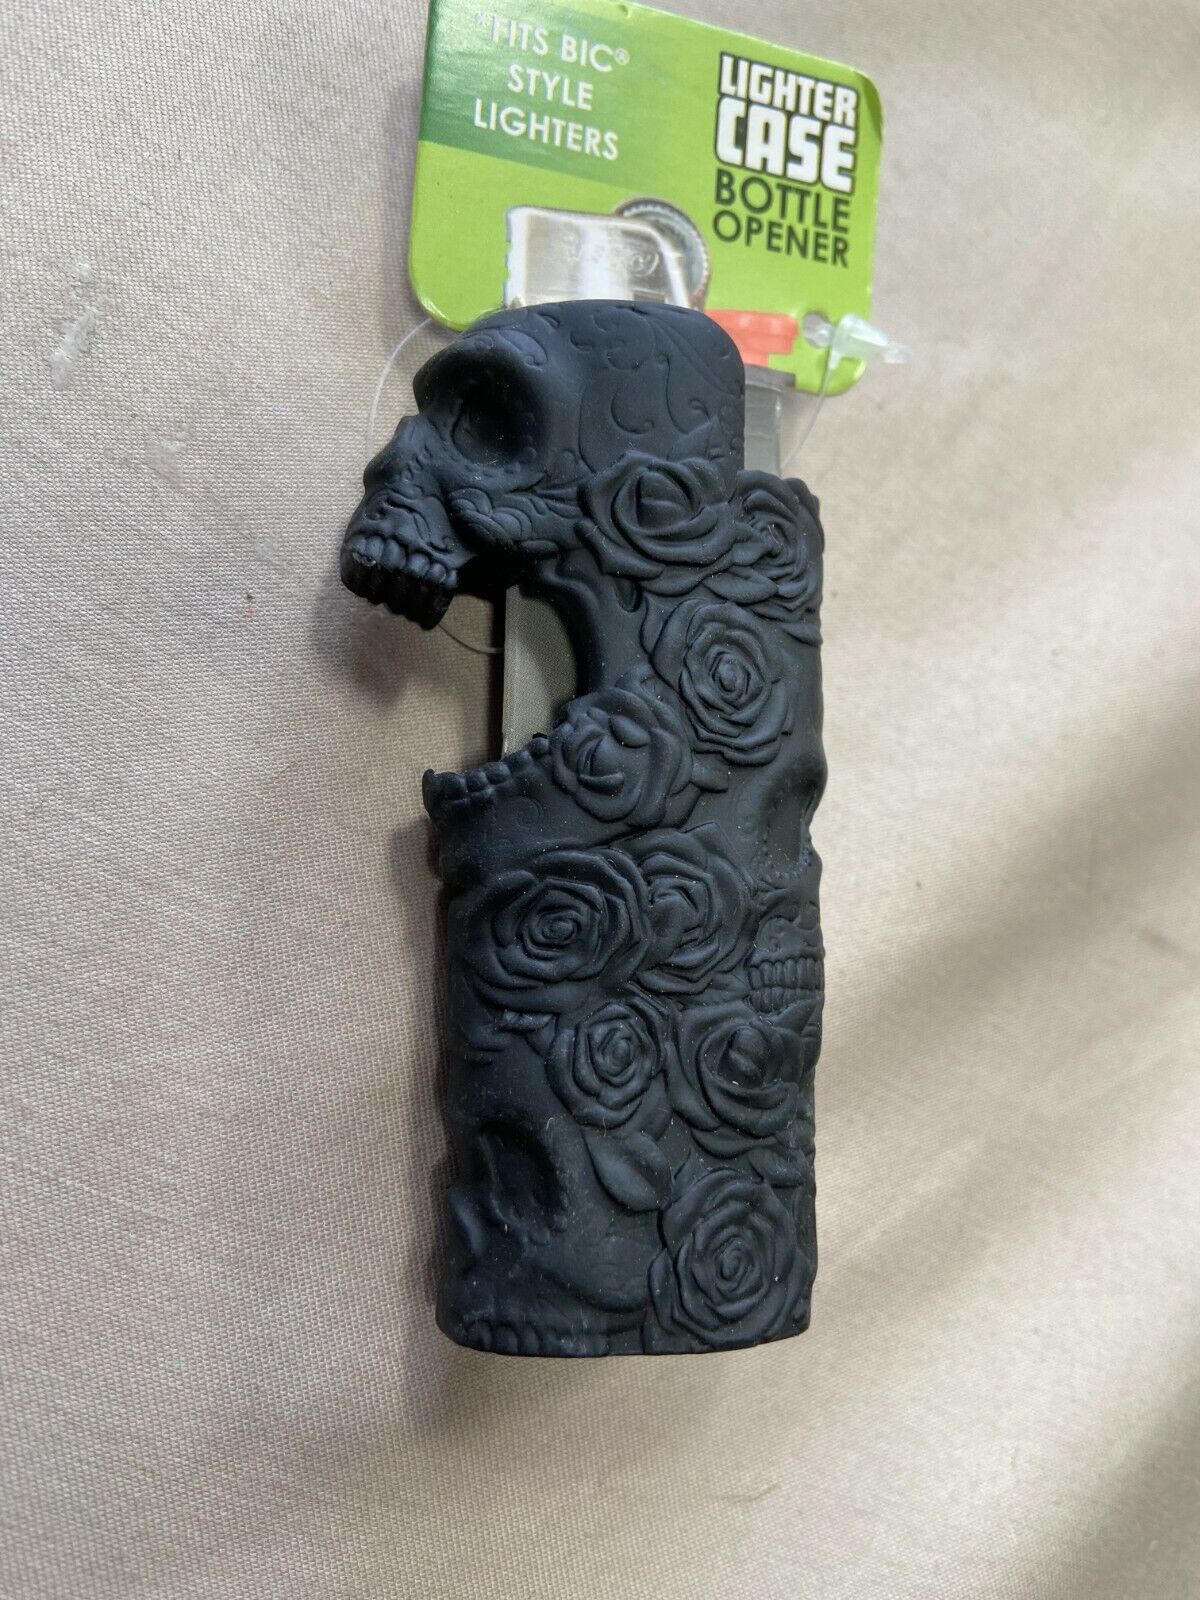 Smokezilla Lighter Case, Matte Black or Pewter, with Bottle Opener 